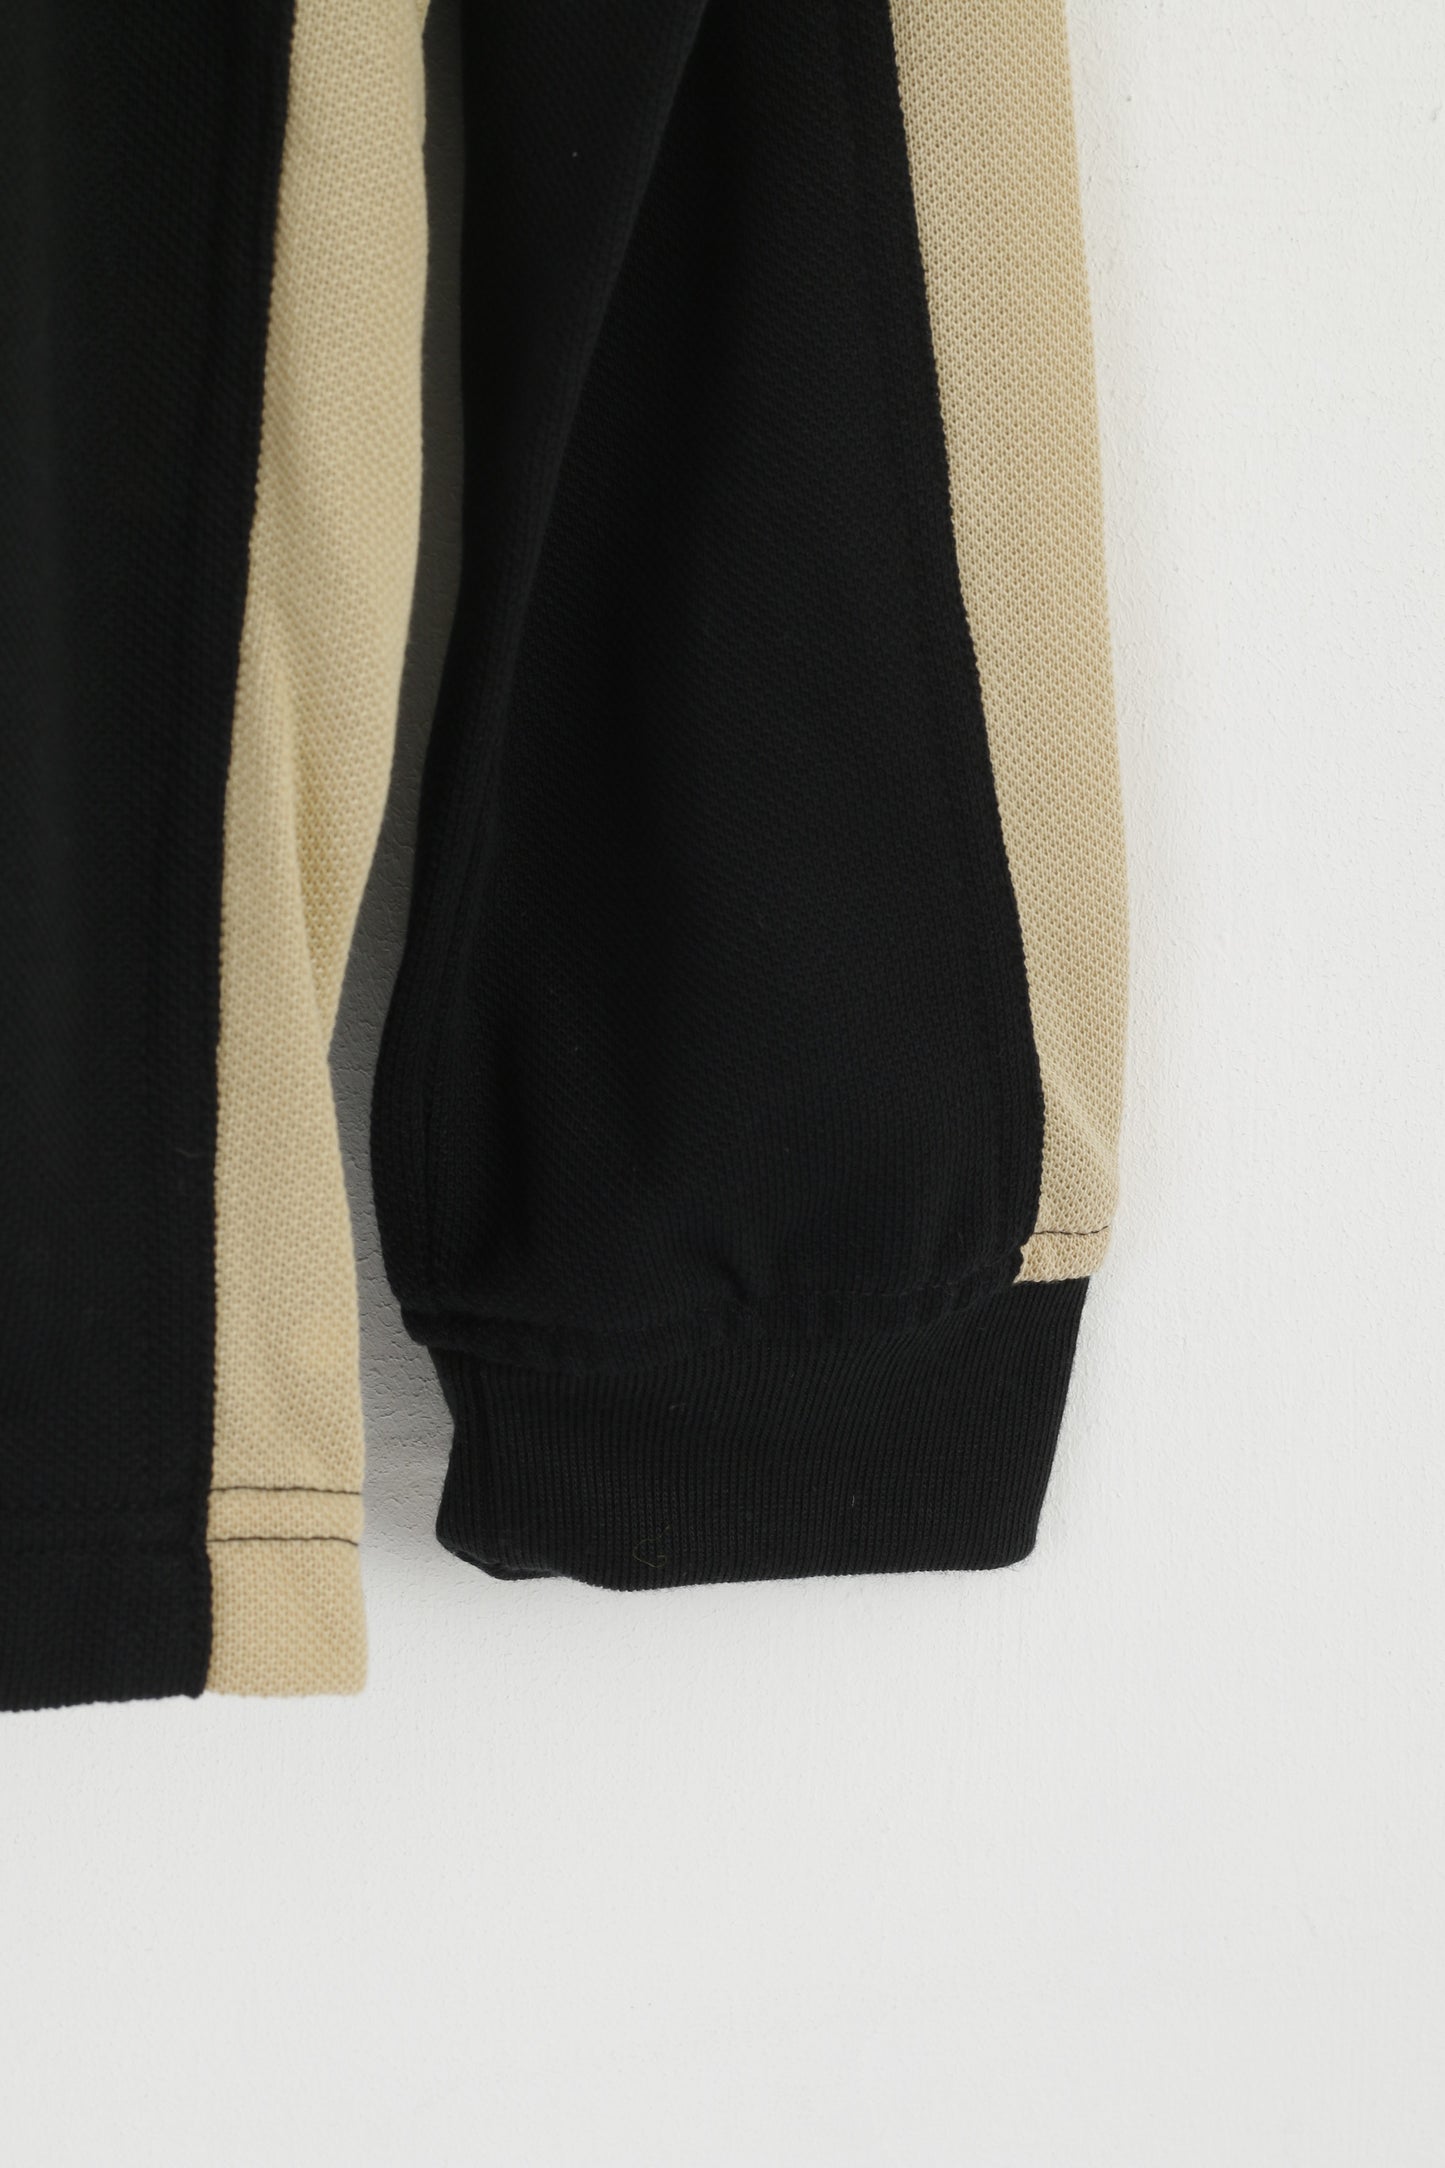 Odlo Men XL Long Sleeved Shirt Black Athletic Clothing System Outdoor Funkctional Top